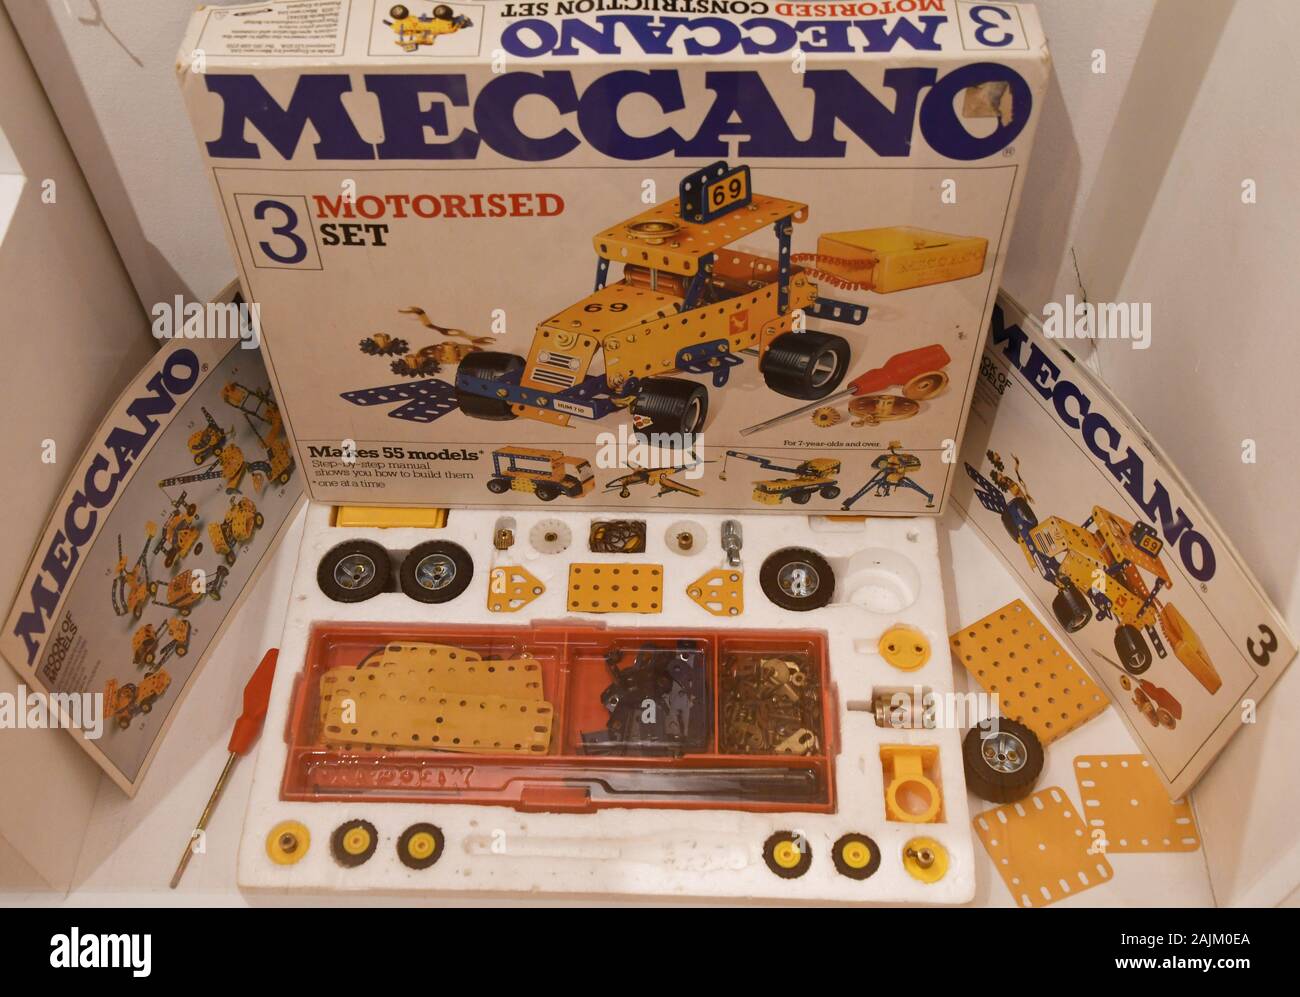 Meccano 3 Motorised Set at Bucks County Museum toy exhibition, Aylesbury, Buckinghamshire, UK Stock Photo